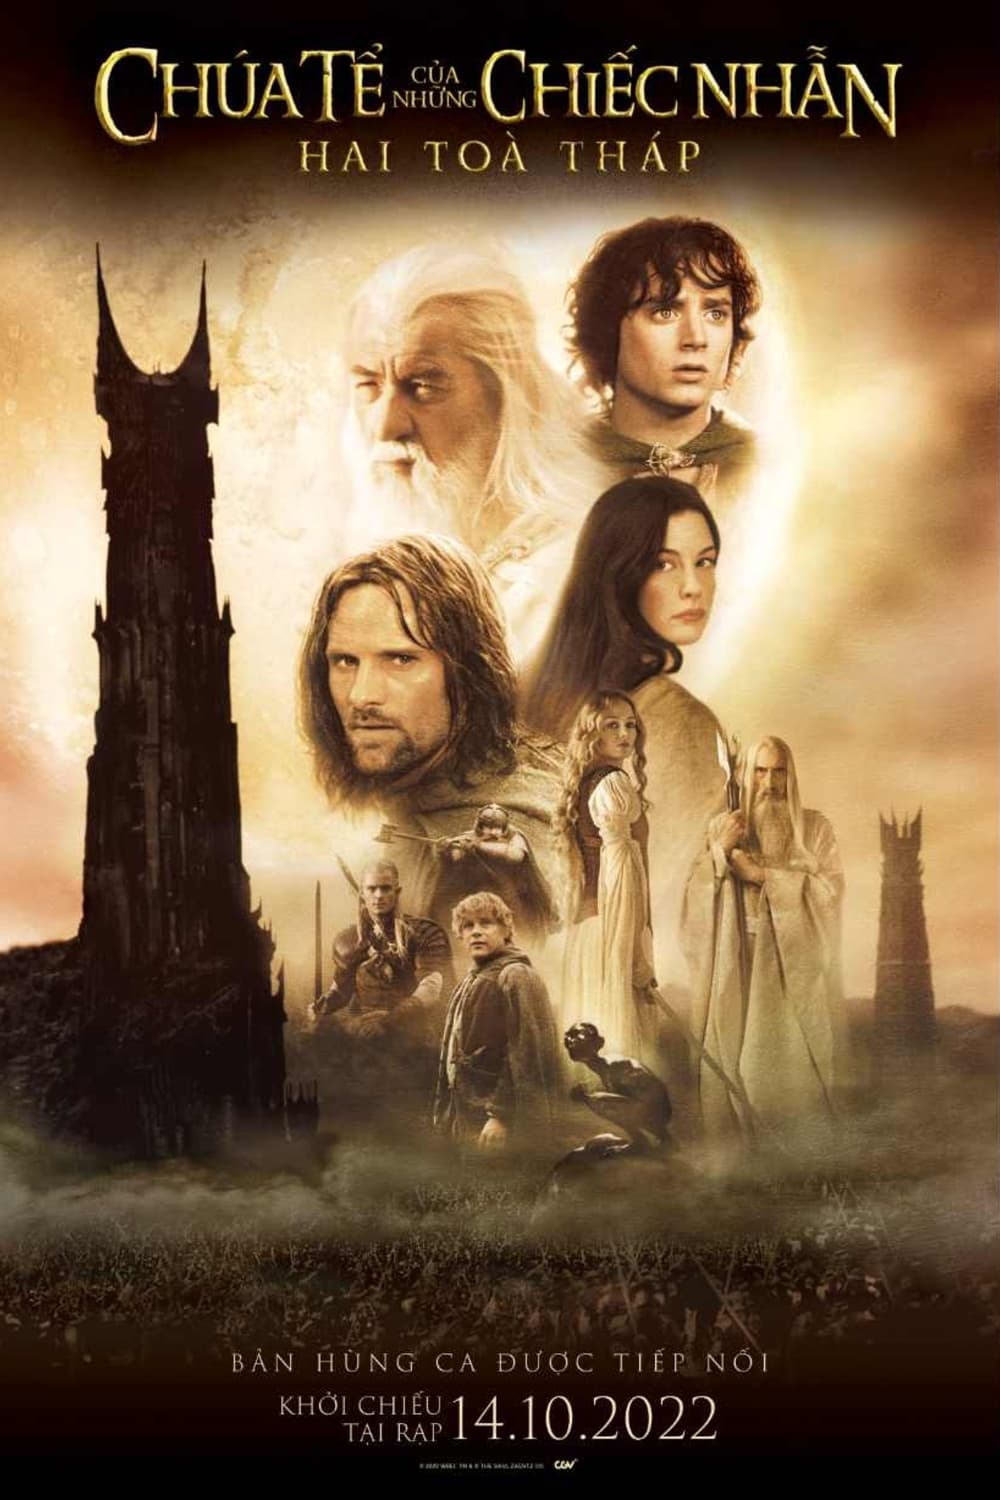 Chúa Tể Của Những Chiếc Nhẫn: Hai Tòa Tháp - The Lord of the Rings: The Two Towers (2002)